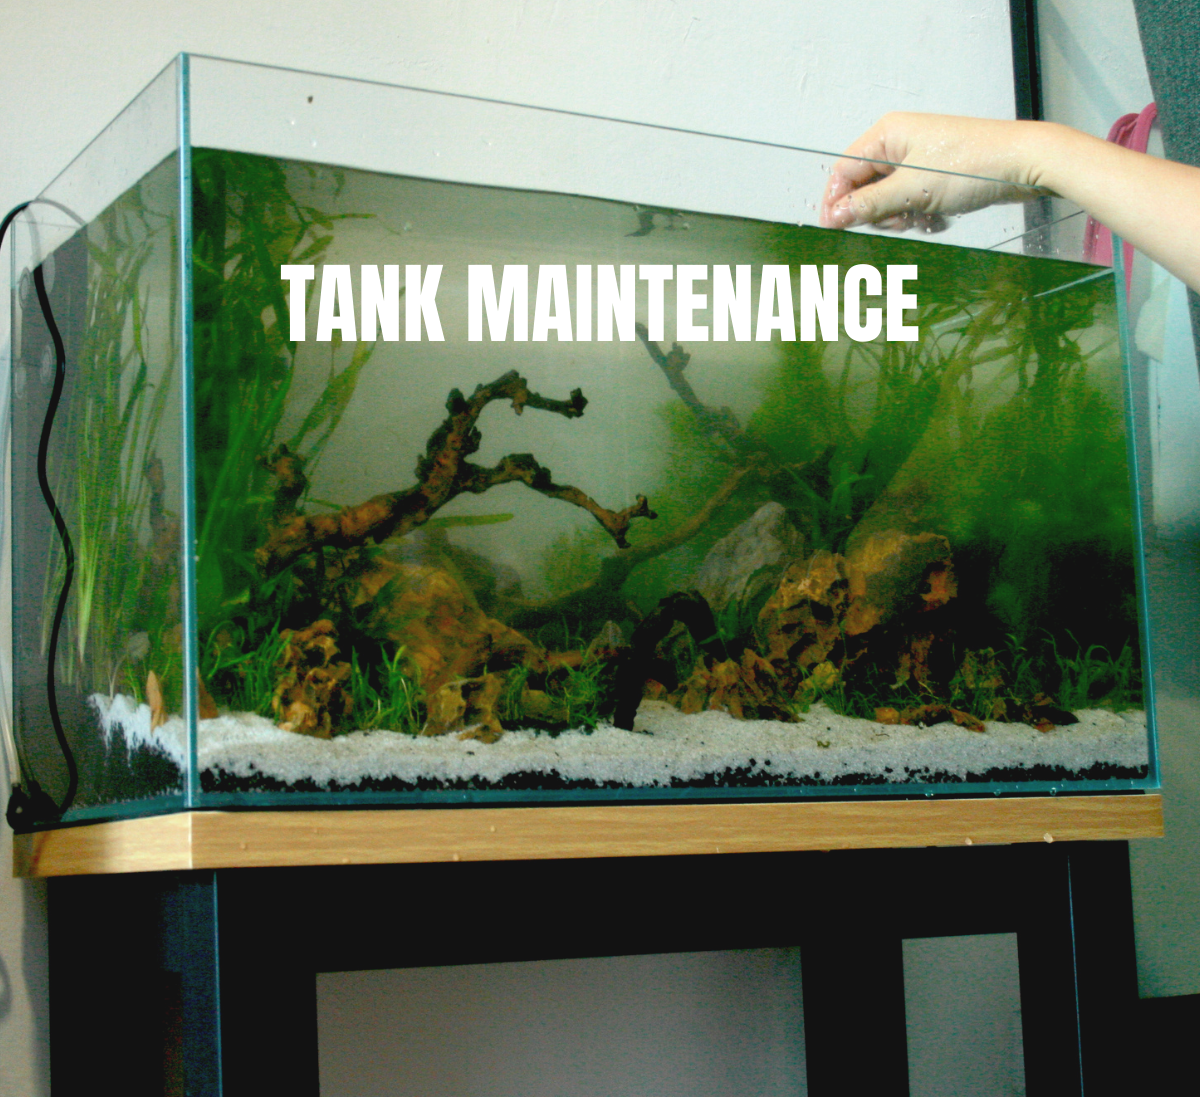 Aquarium Maintenance Service Singapore: Keep Your Fish Tank in Top